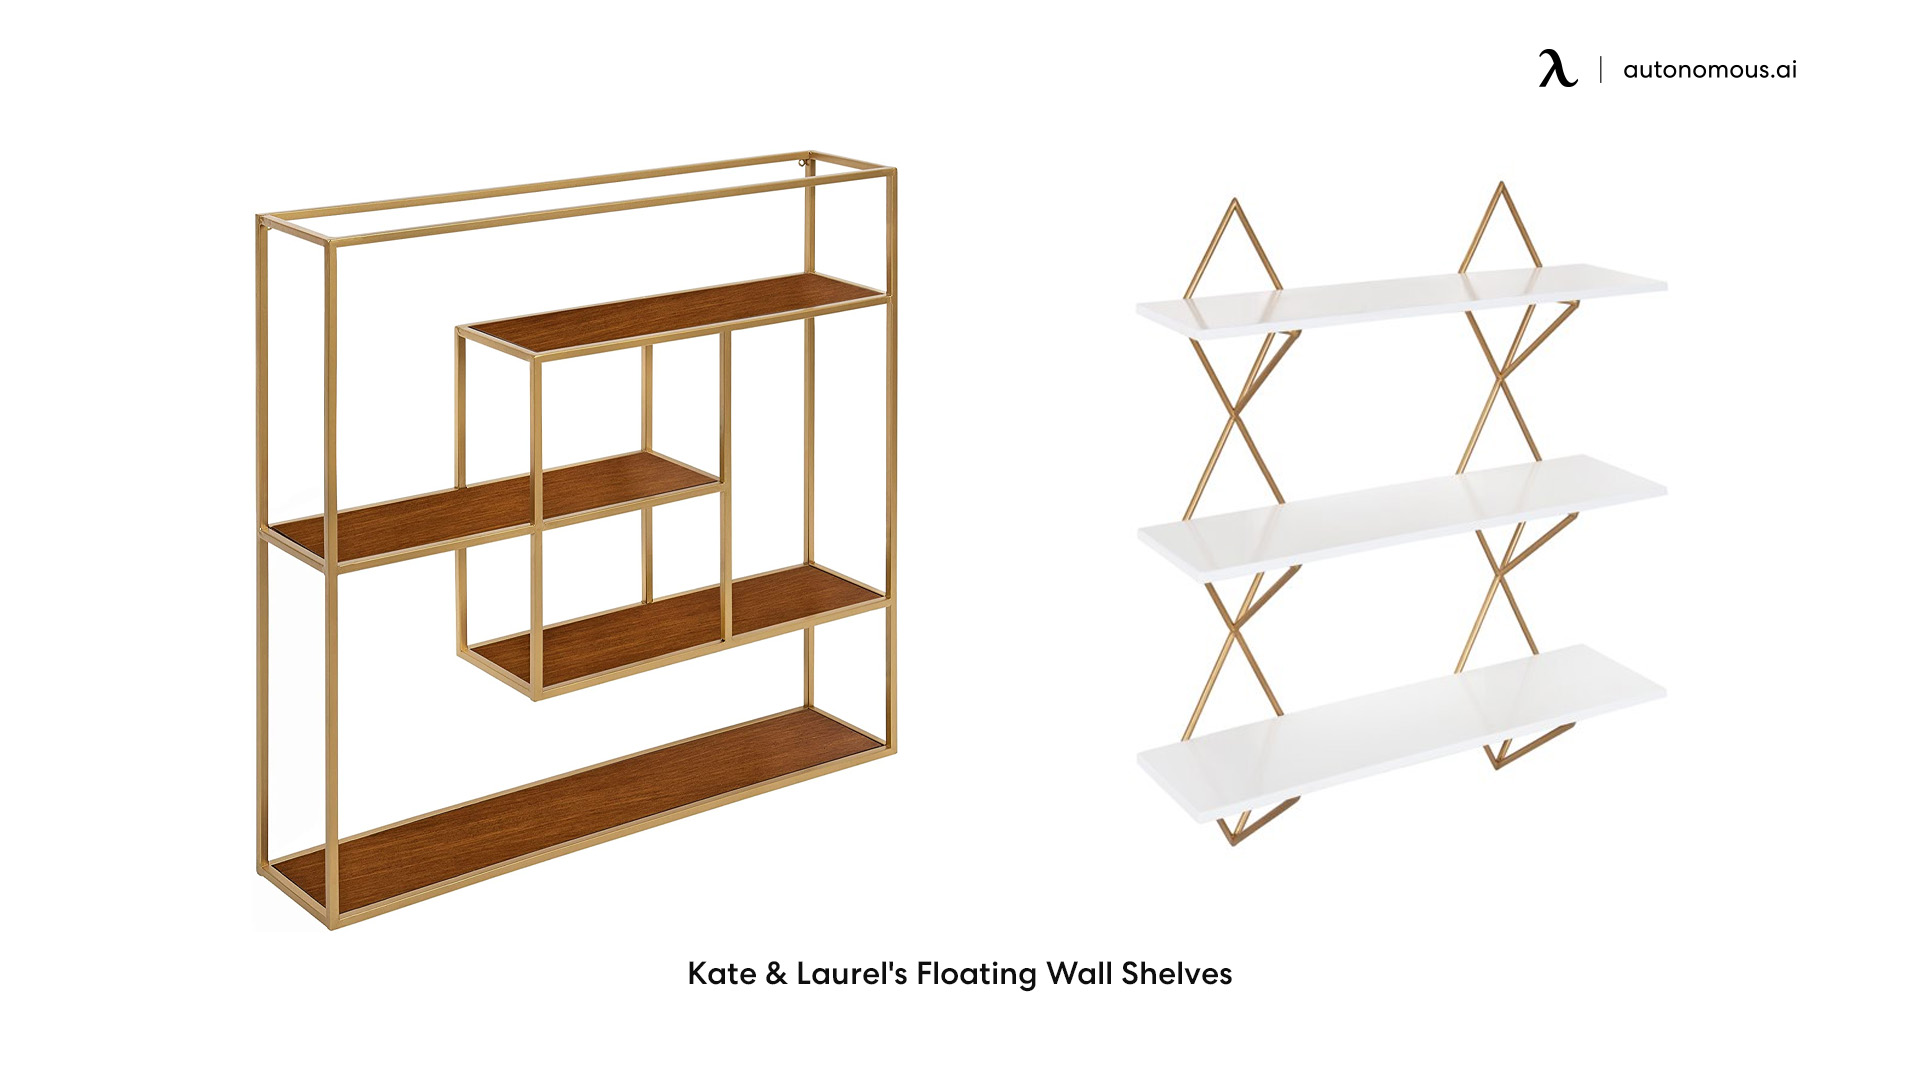 Kate & Laurel's Floating Wall Shelves